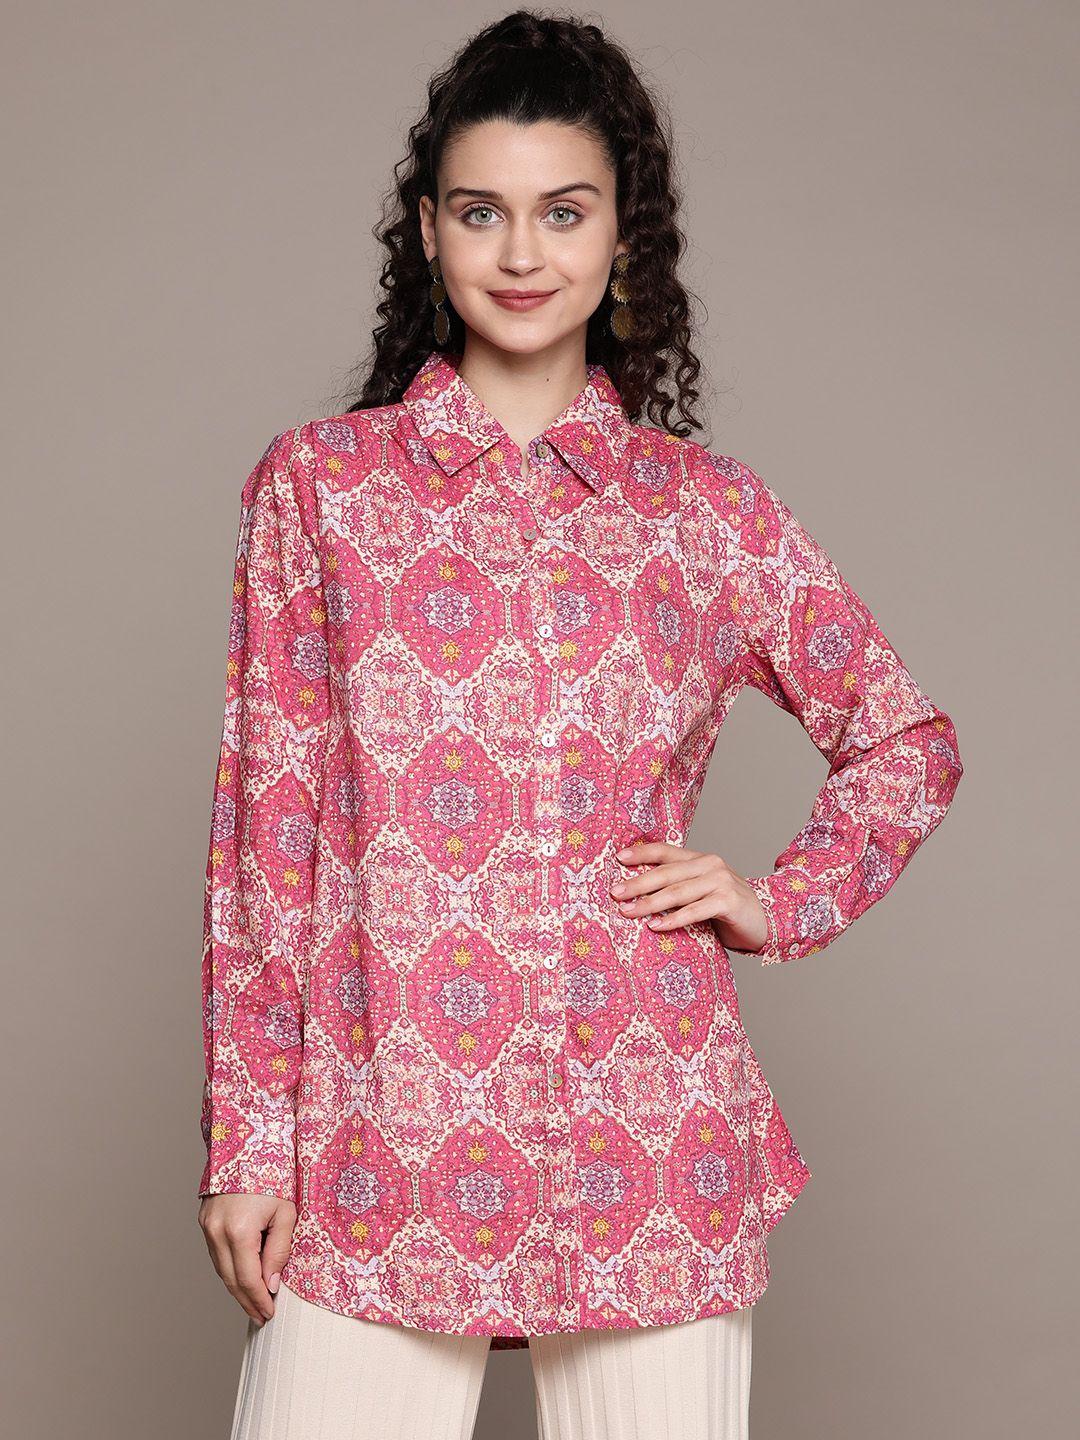 aarke ritu kumar ethnic motifs printed casual shirt